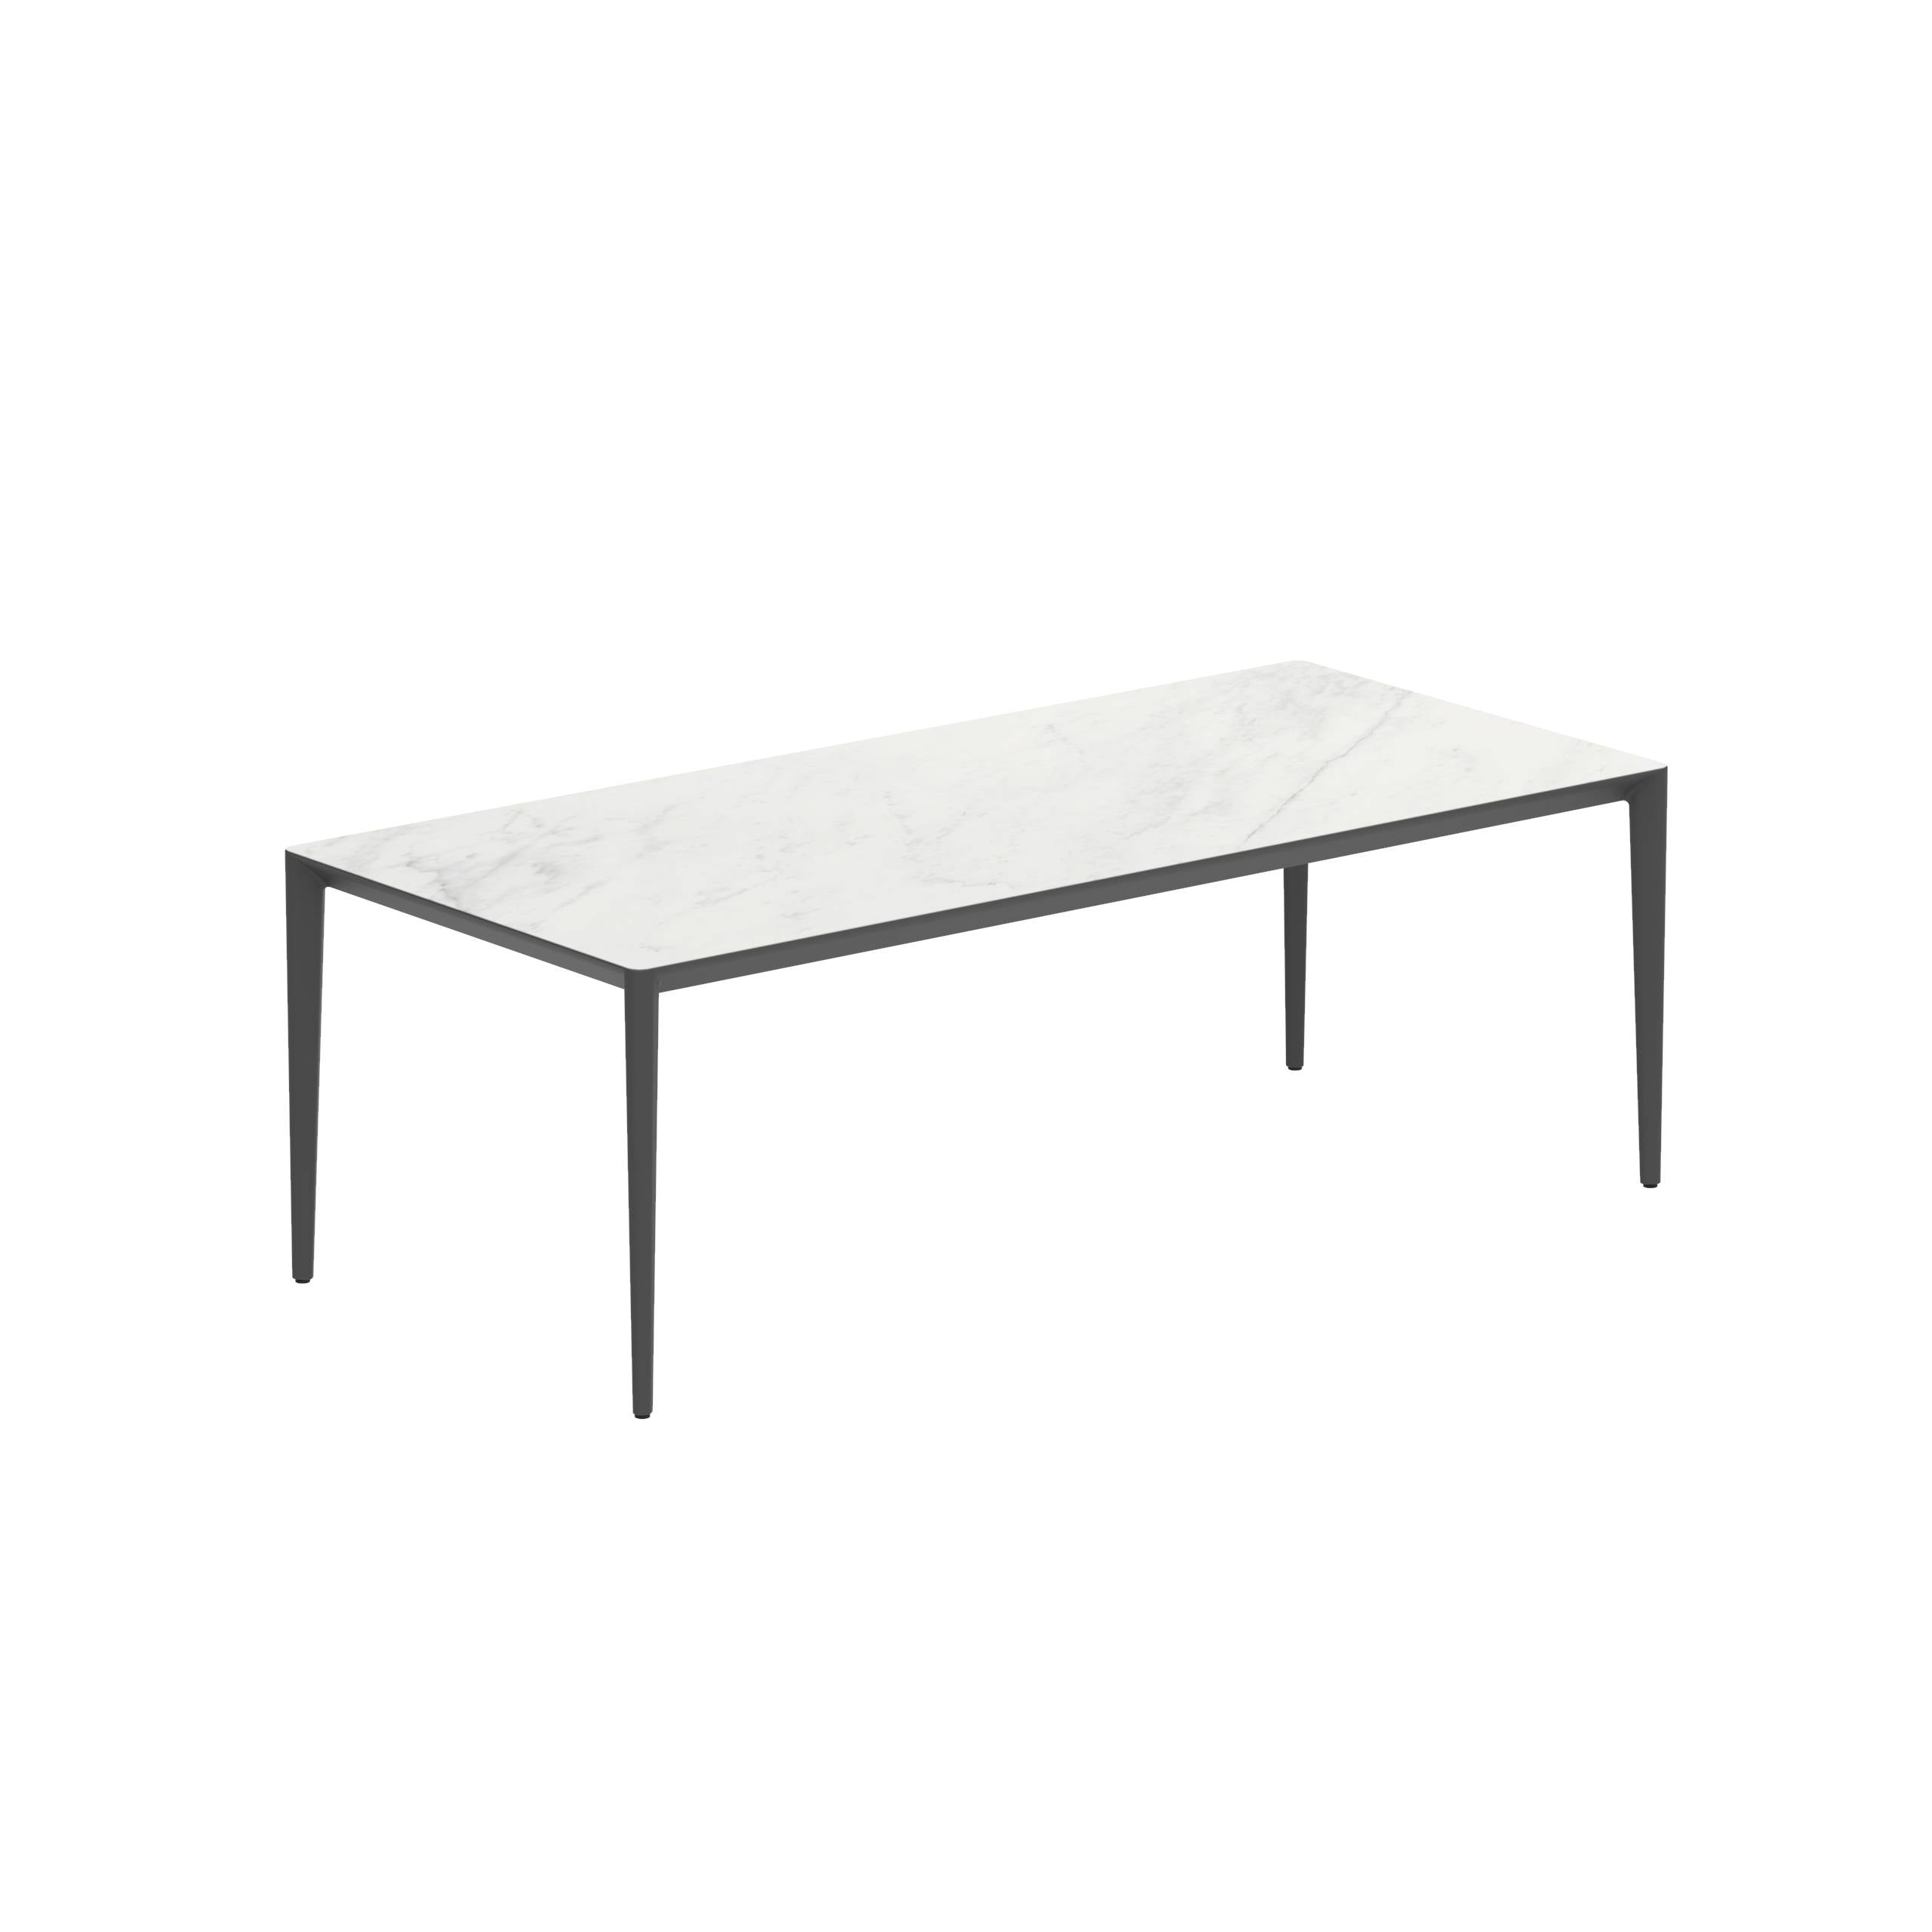 U-Nite Table 220x100cm Anthracite With Ceramic Tabletop In Bianco Statuario